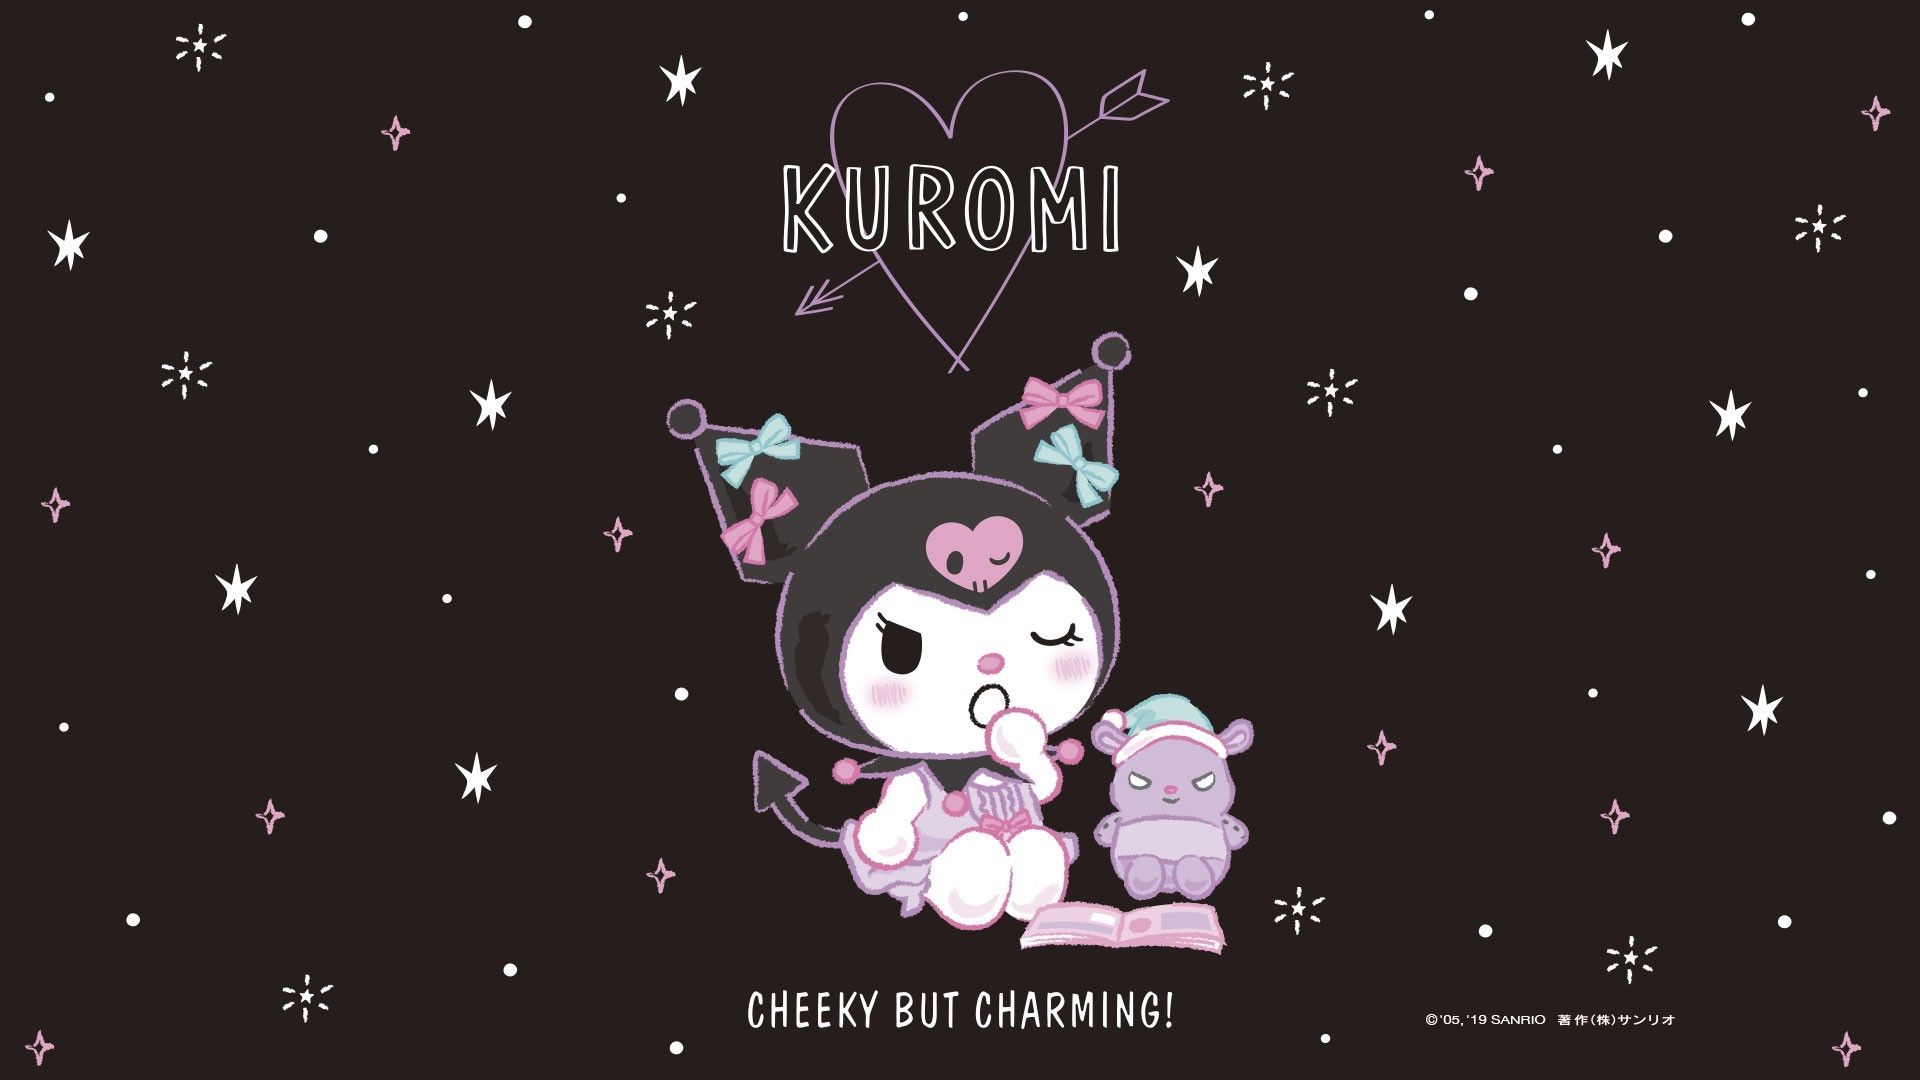 Kuromi Wallpaper. Sanrio wallpaper, My melody wallpaper, Hello kitty wallpaper hd